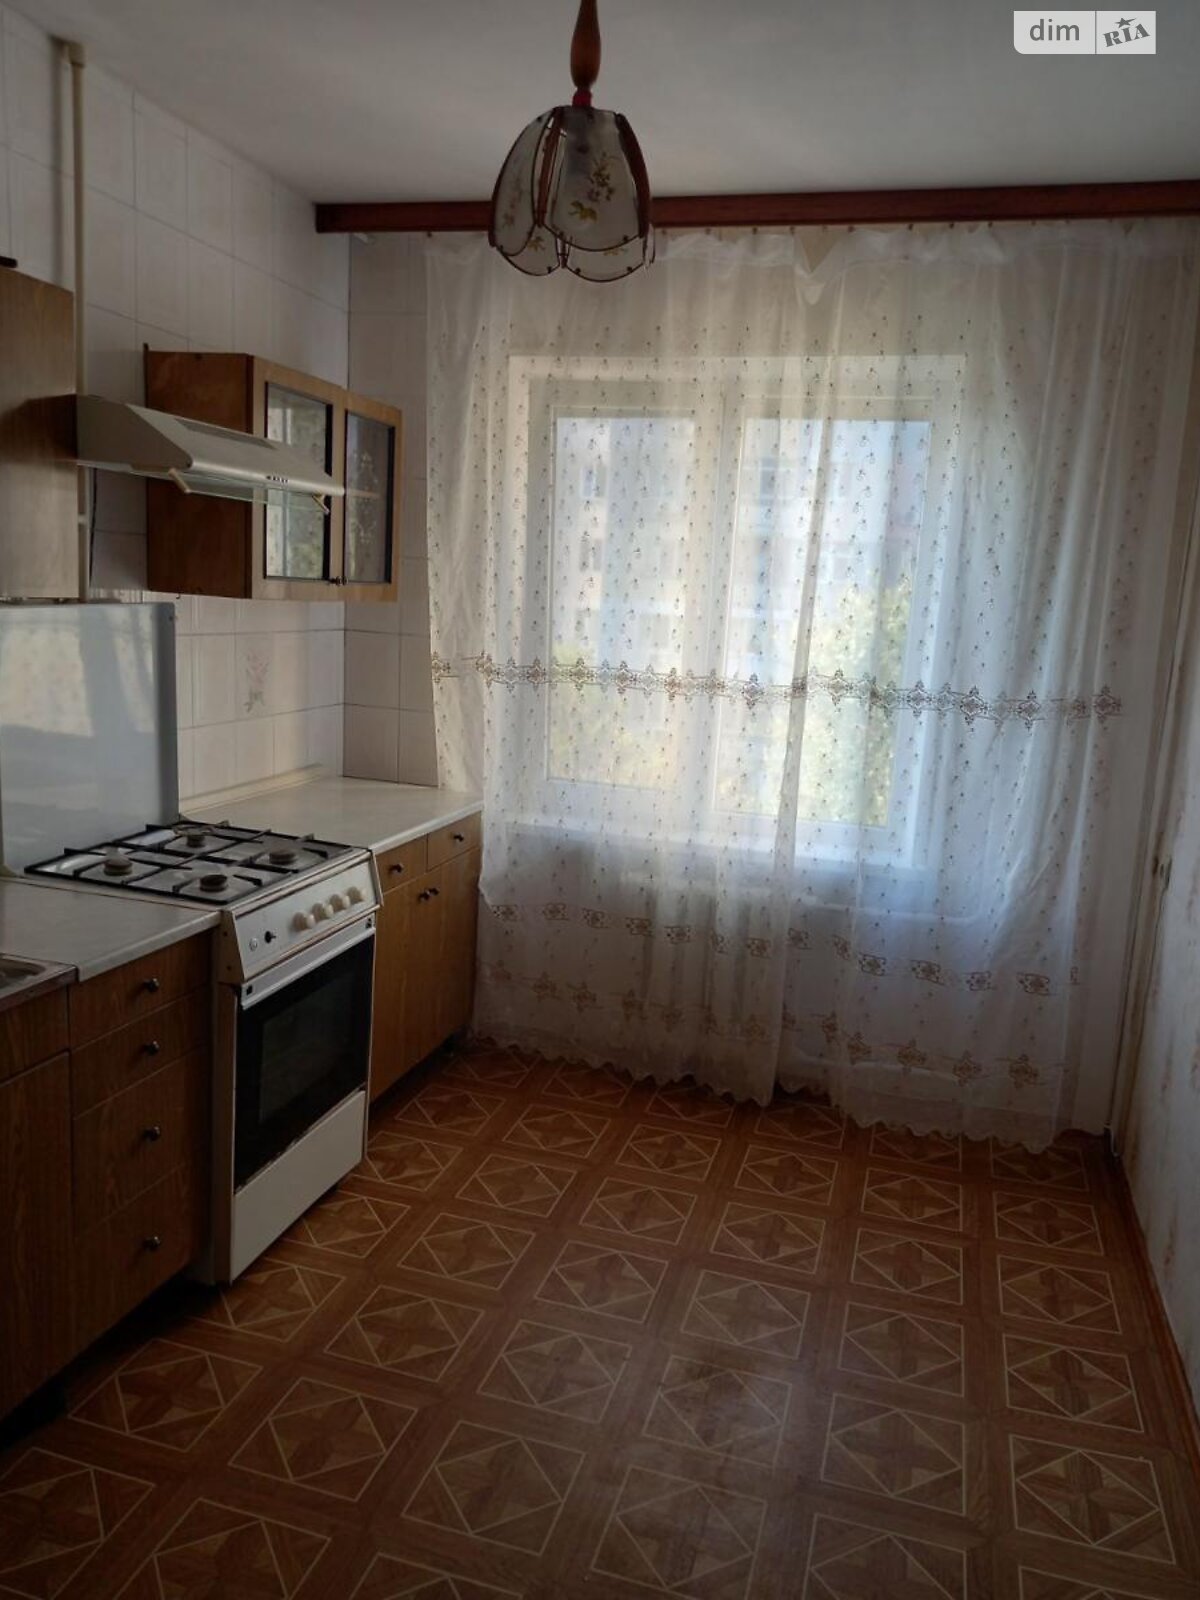 Продажа трехкомнатной квартиры в Одессе, на ул. Академика Королева, район Приморский фото 1